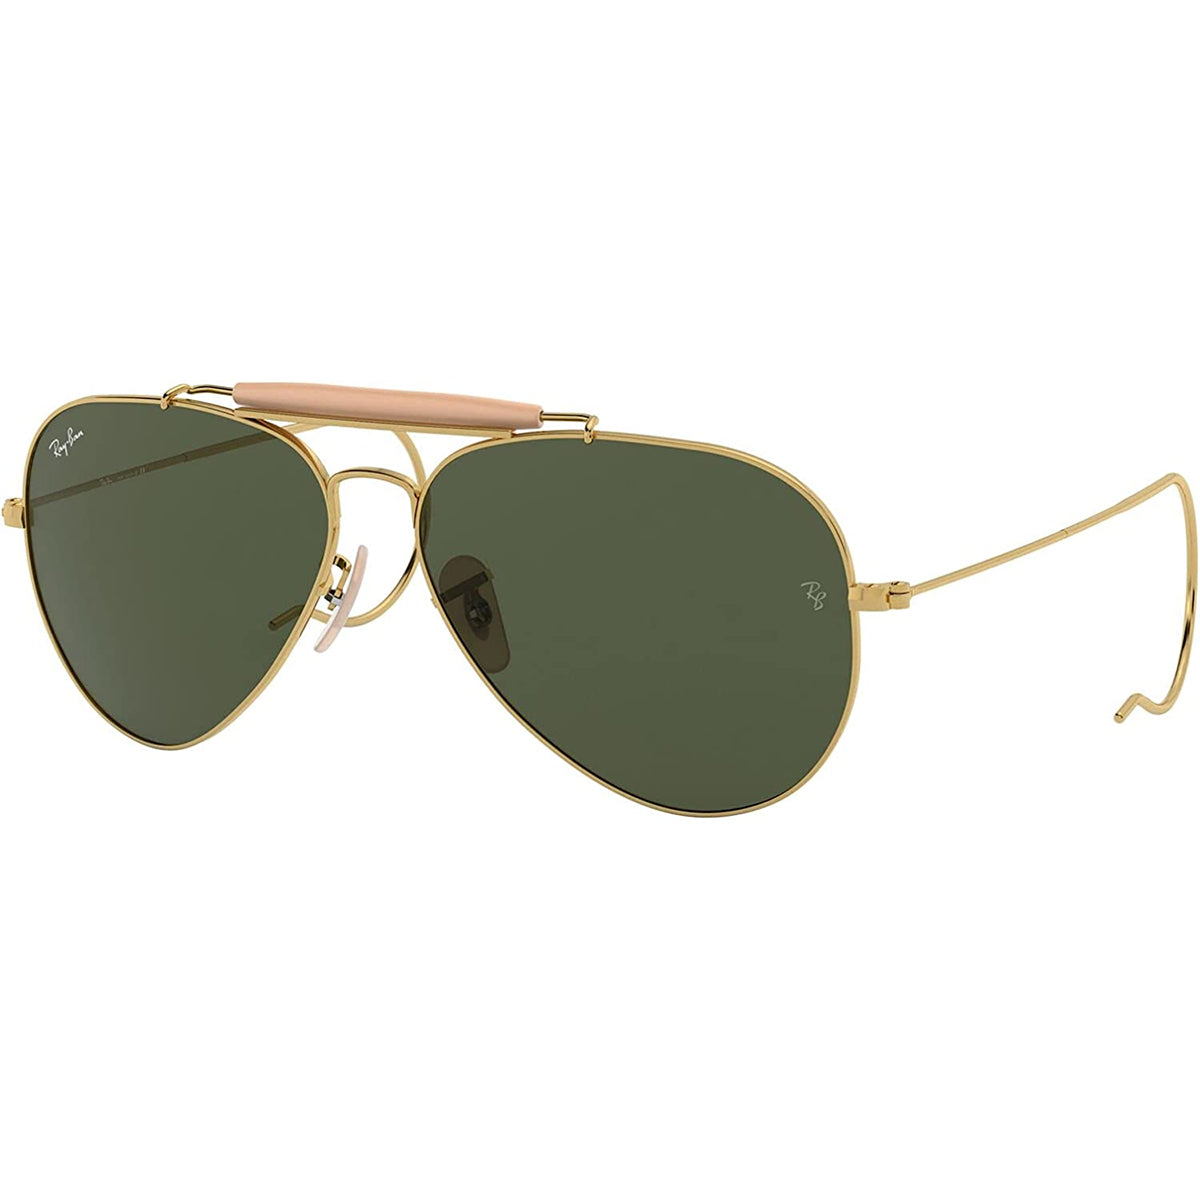 Ray-Ban Outdoorsman Men's Aviator Sunglasses-0RB3030